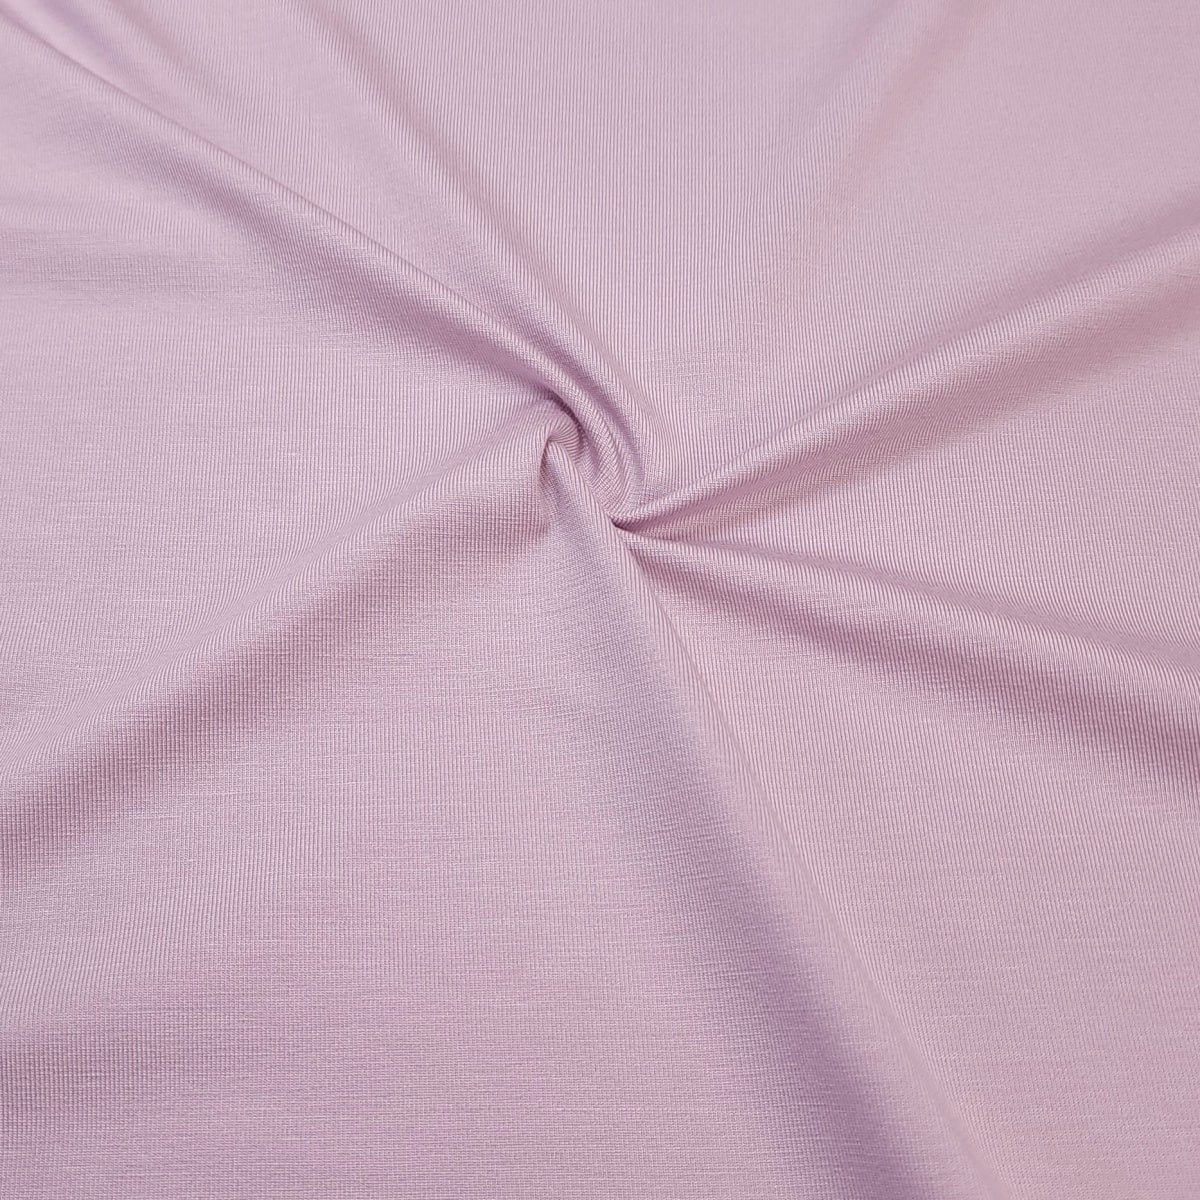 Modal Jersey Fabric - Lilac